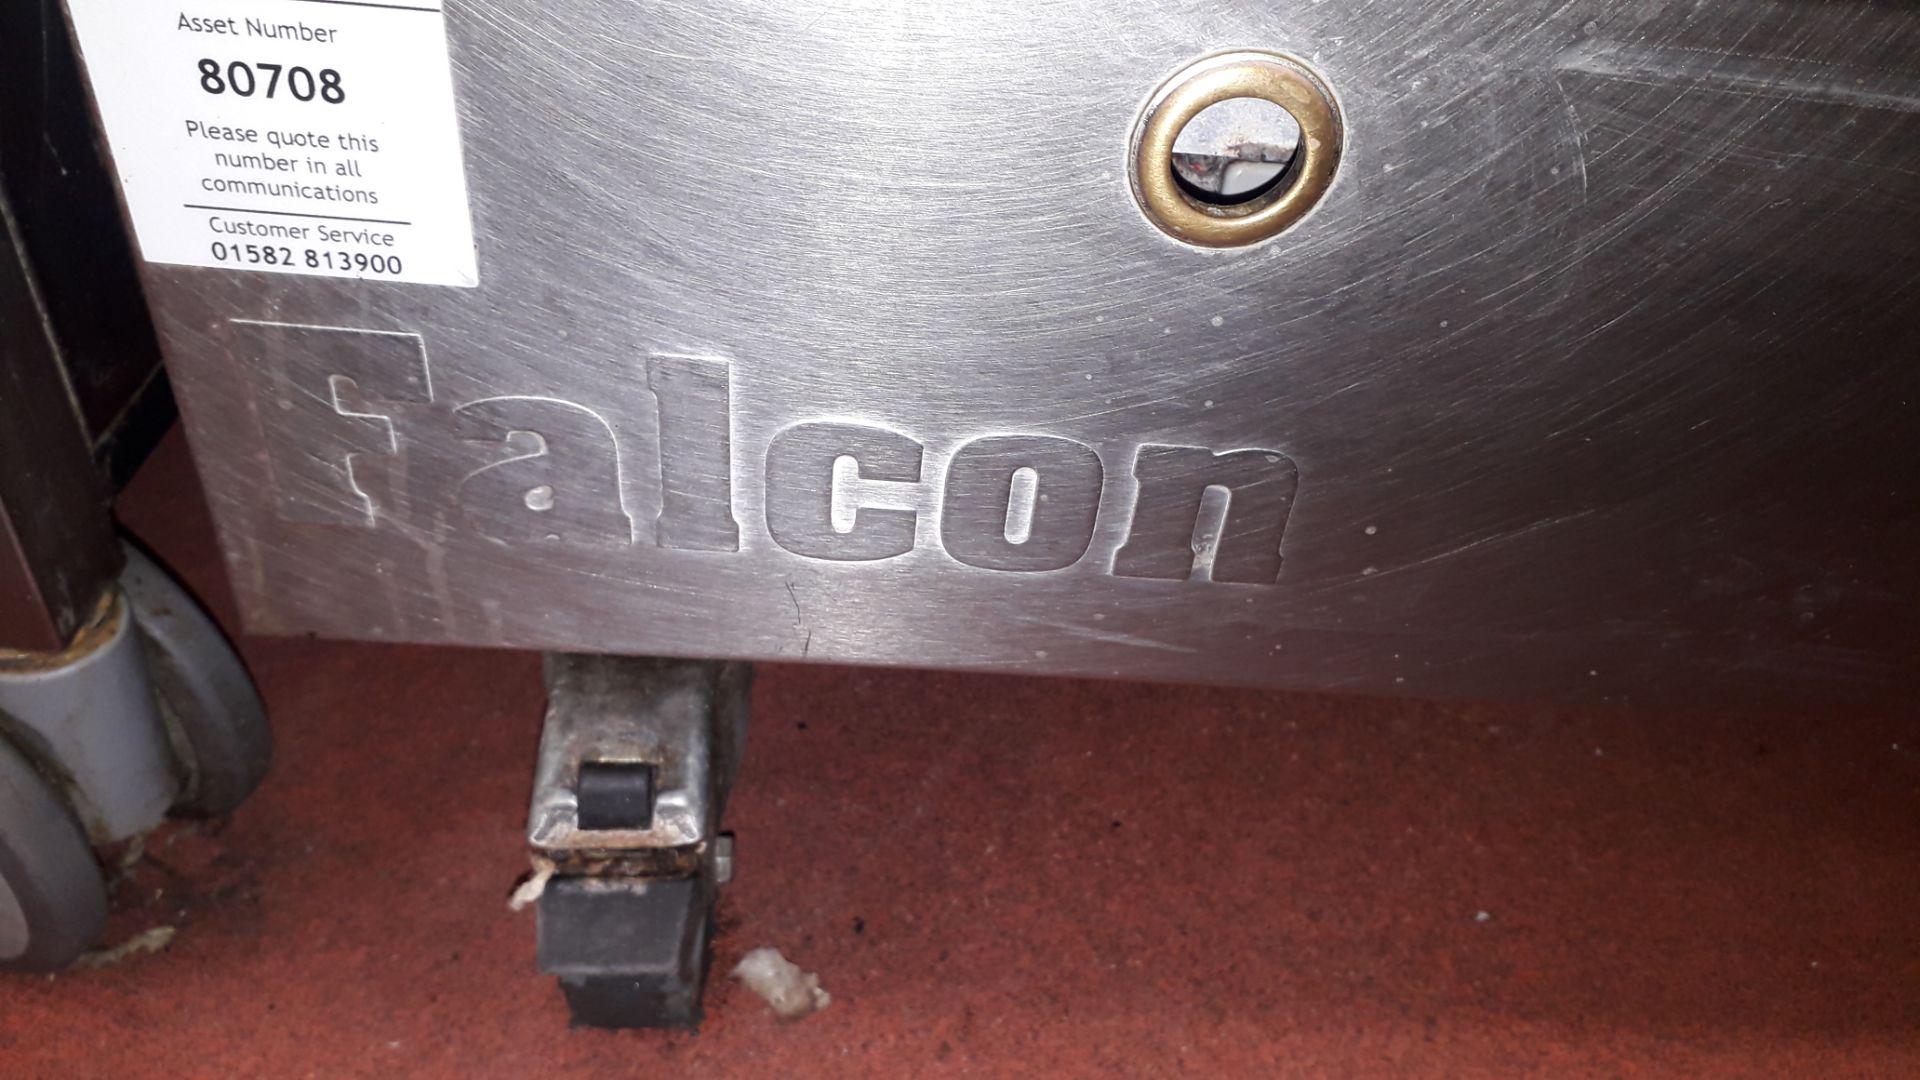 Falcon Stainless Steel Tilting Bratt Pan - Image 3 of 3